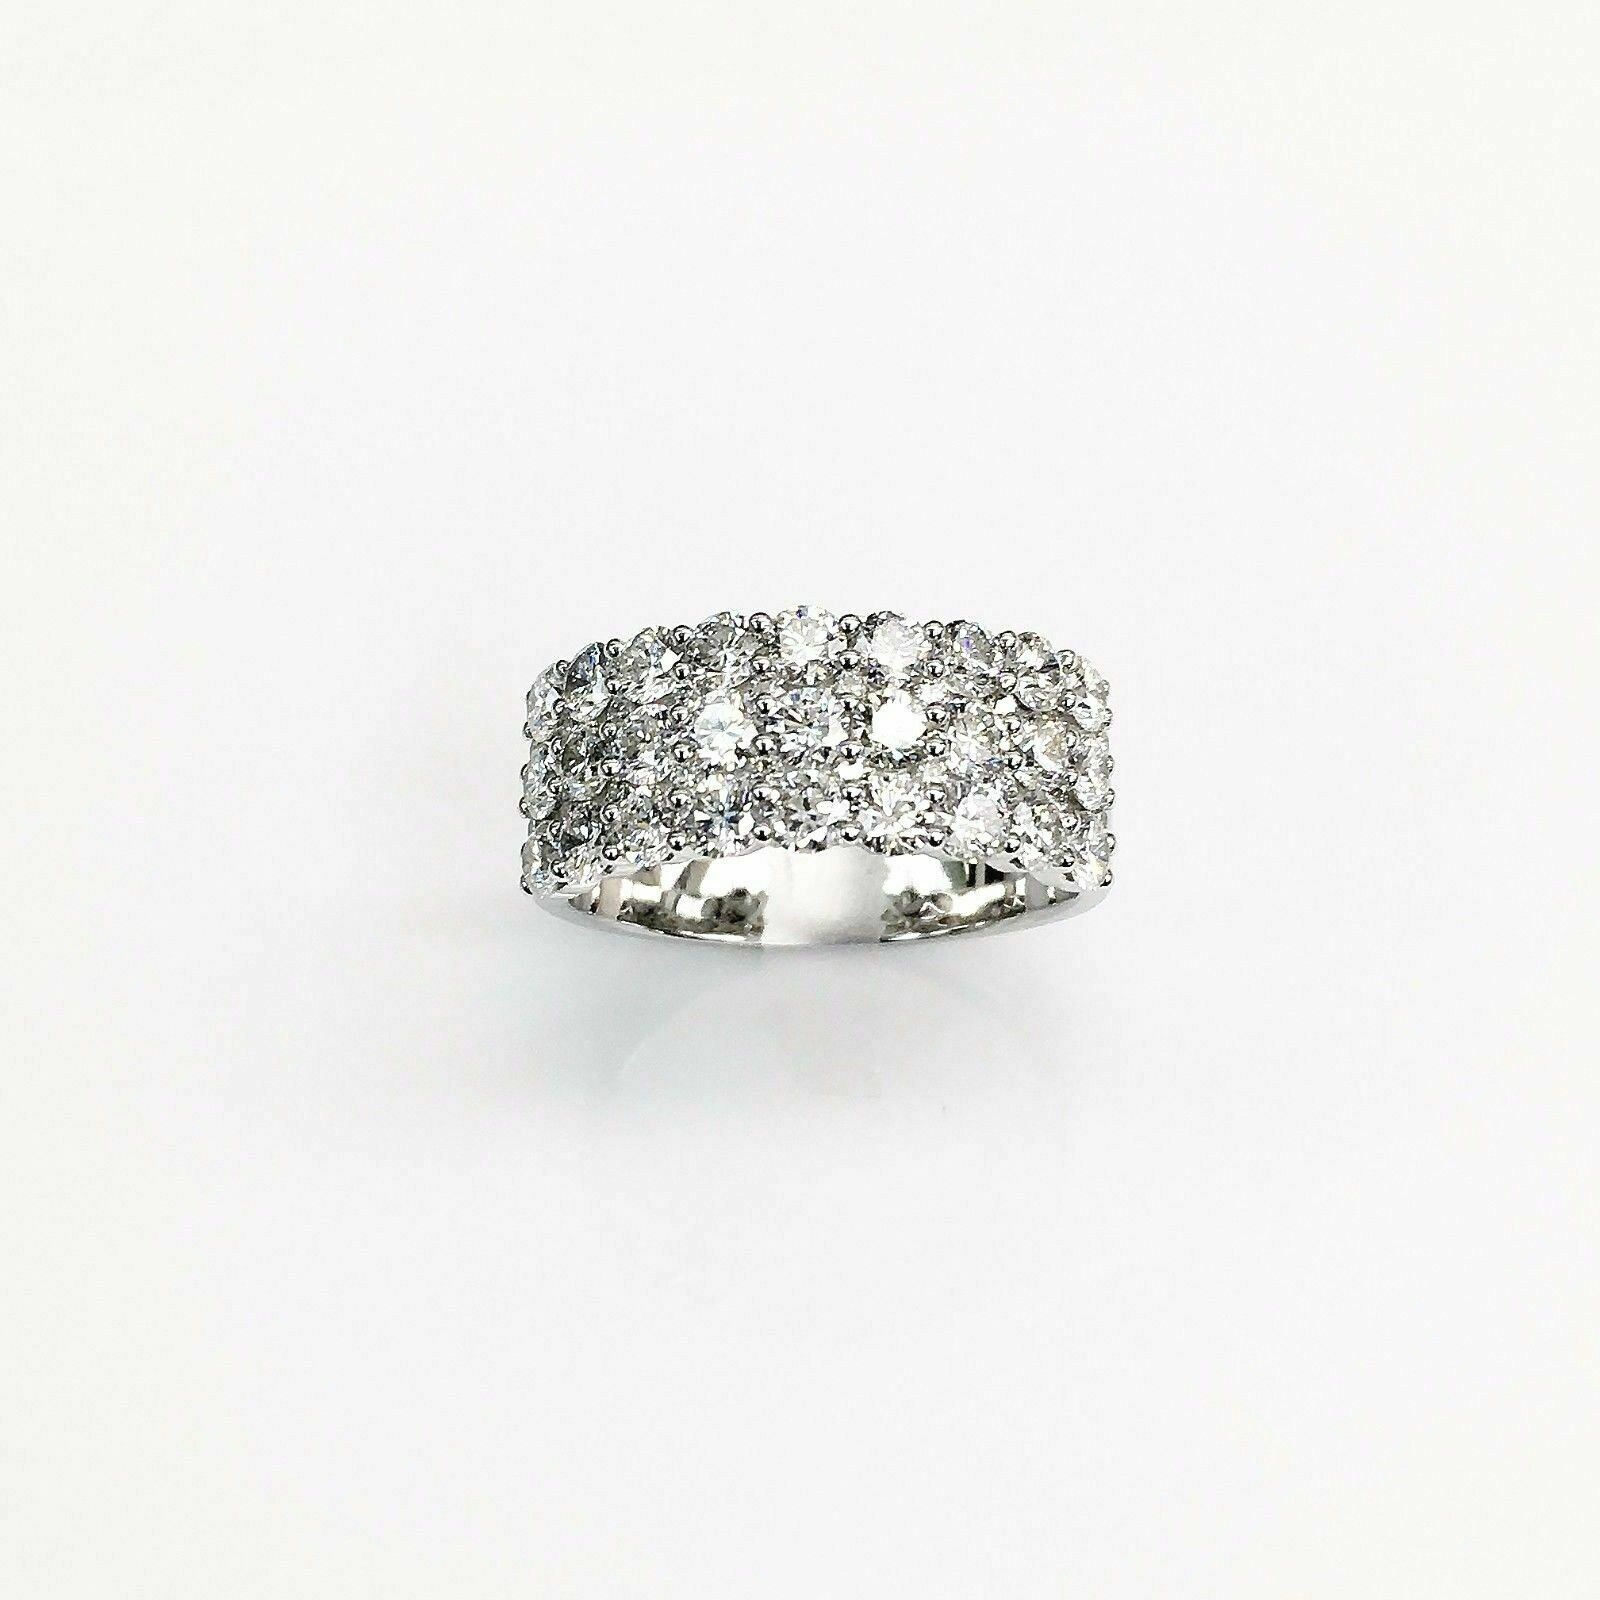 2.35 Carats t.w. Diamond Anniversary/Wedding Ring 18K Gold New 5 Rows ofDiamonds